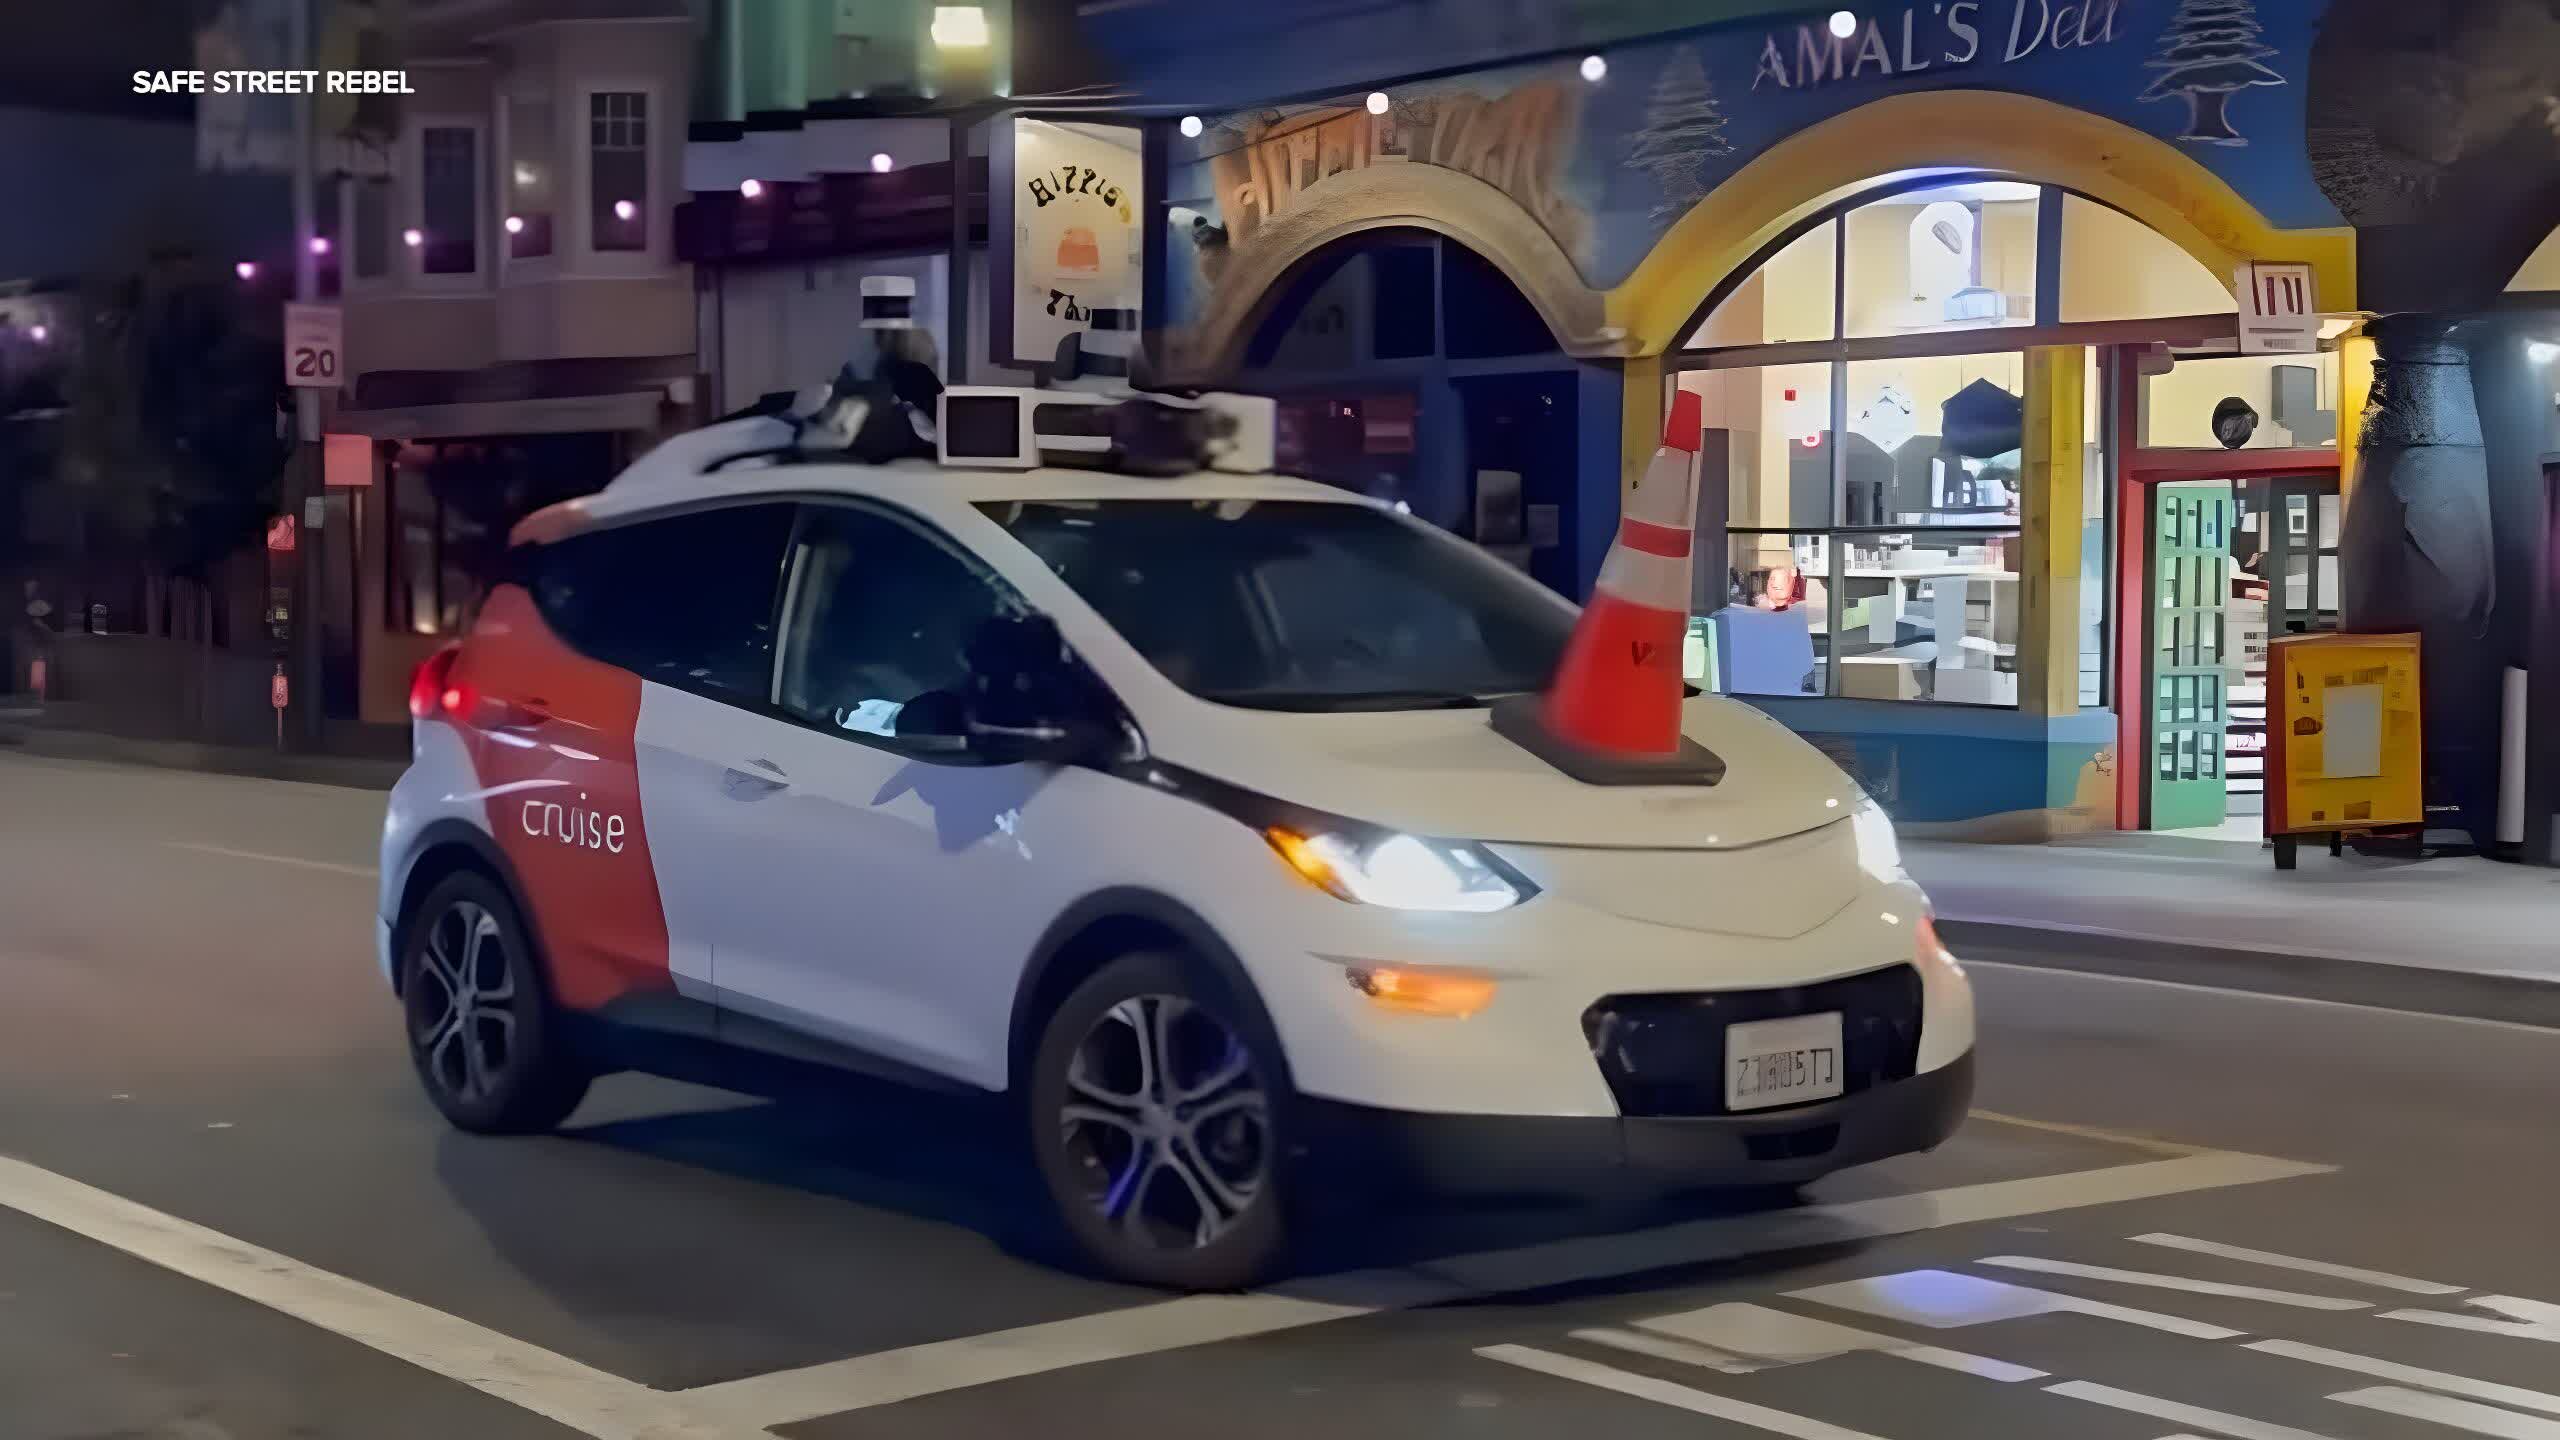 Protesters in San Francisco Utilize Traffic Cones to Disable Autonomous Vehicles